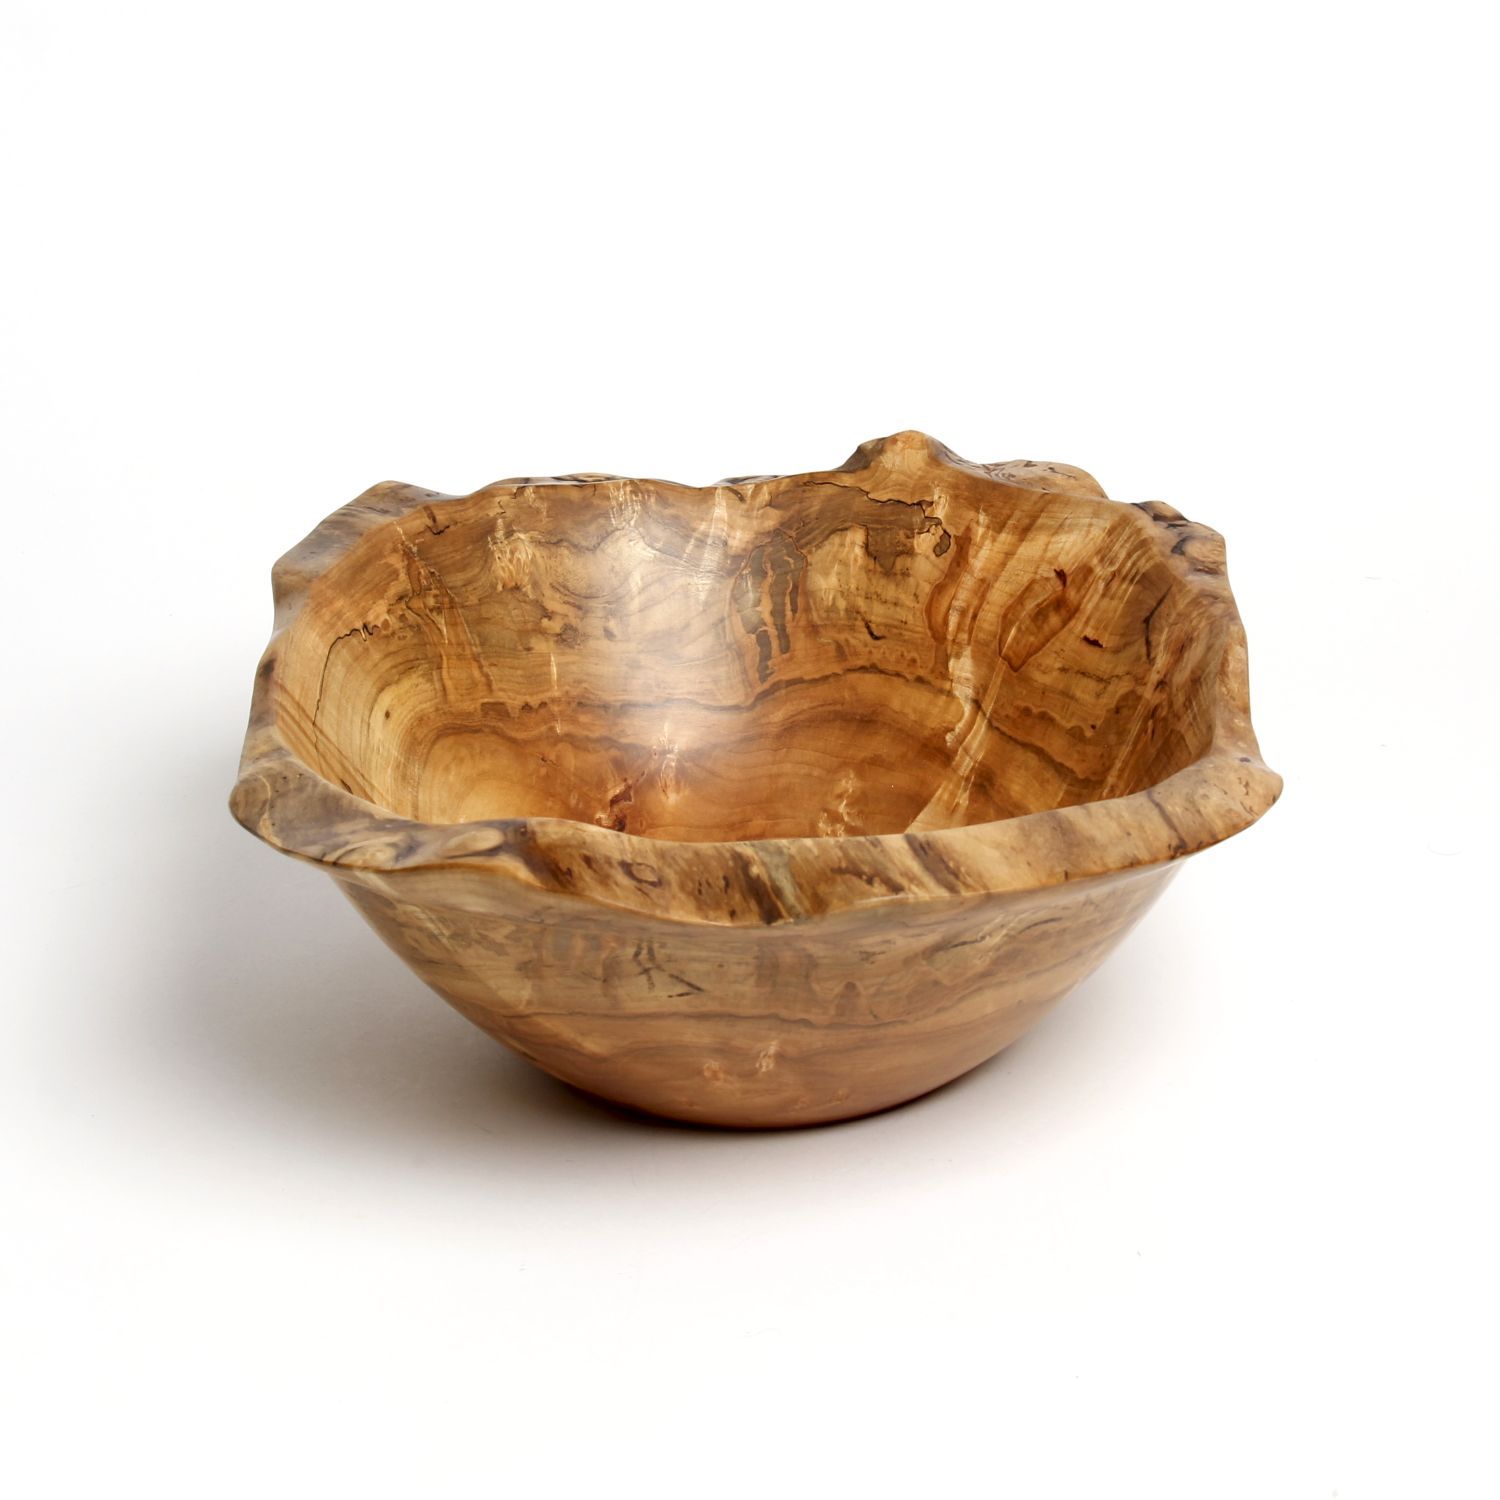 Michael Sbrocca: Bowl Maple Product Image 4 of 4